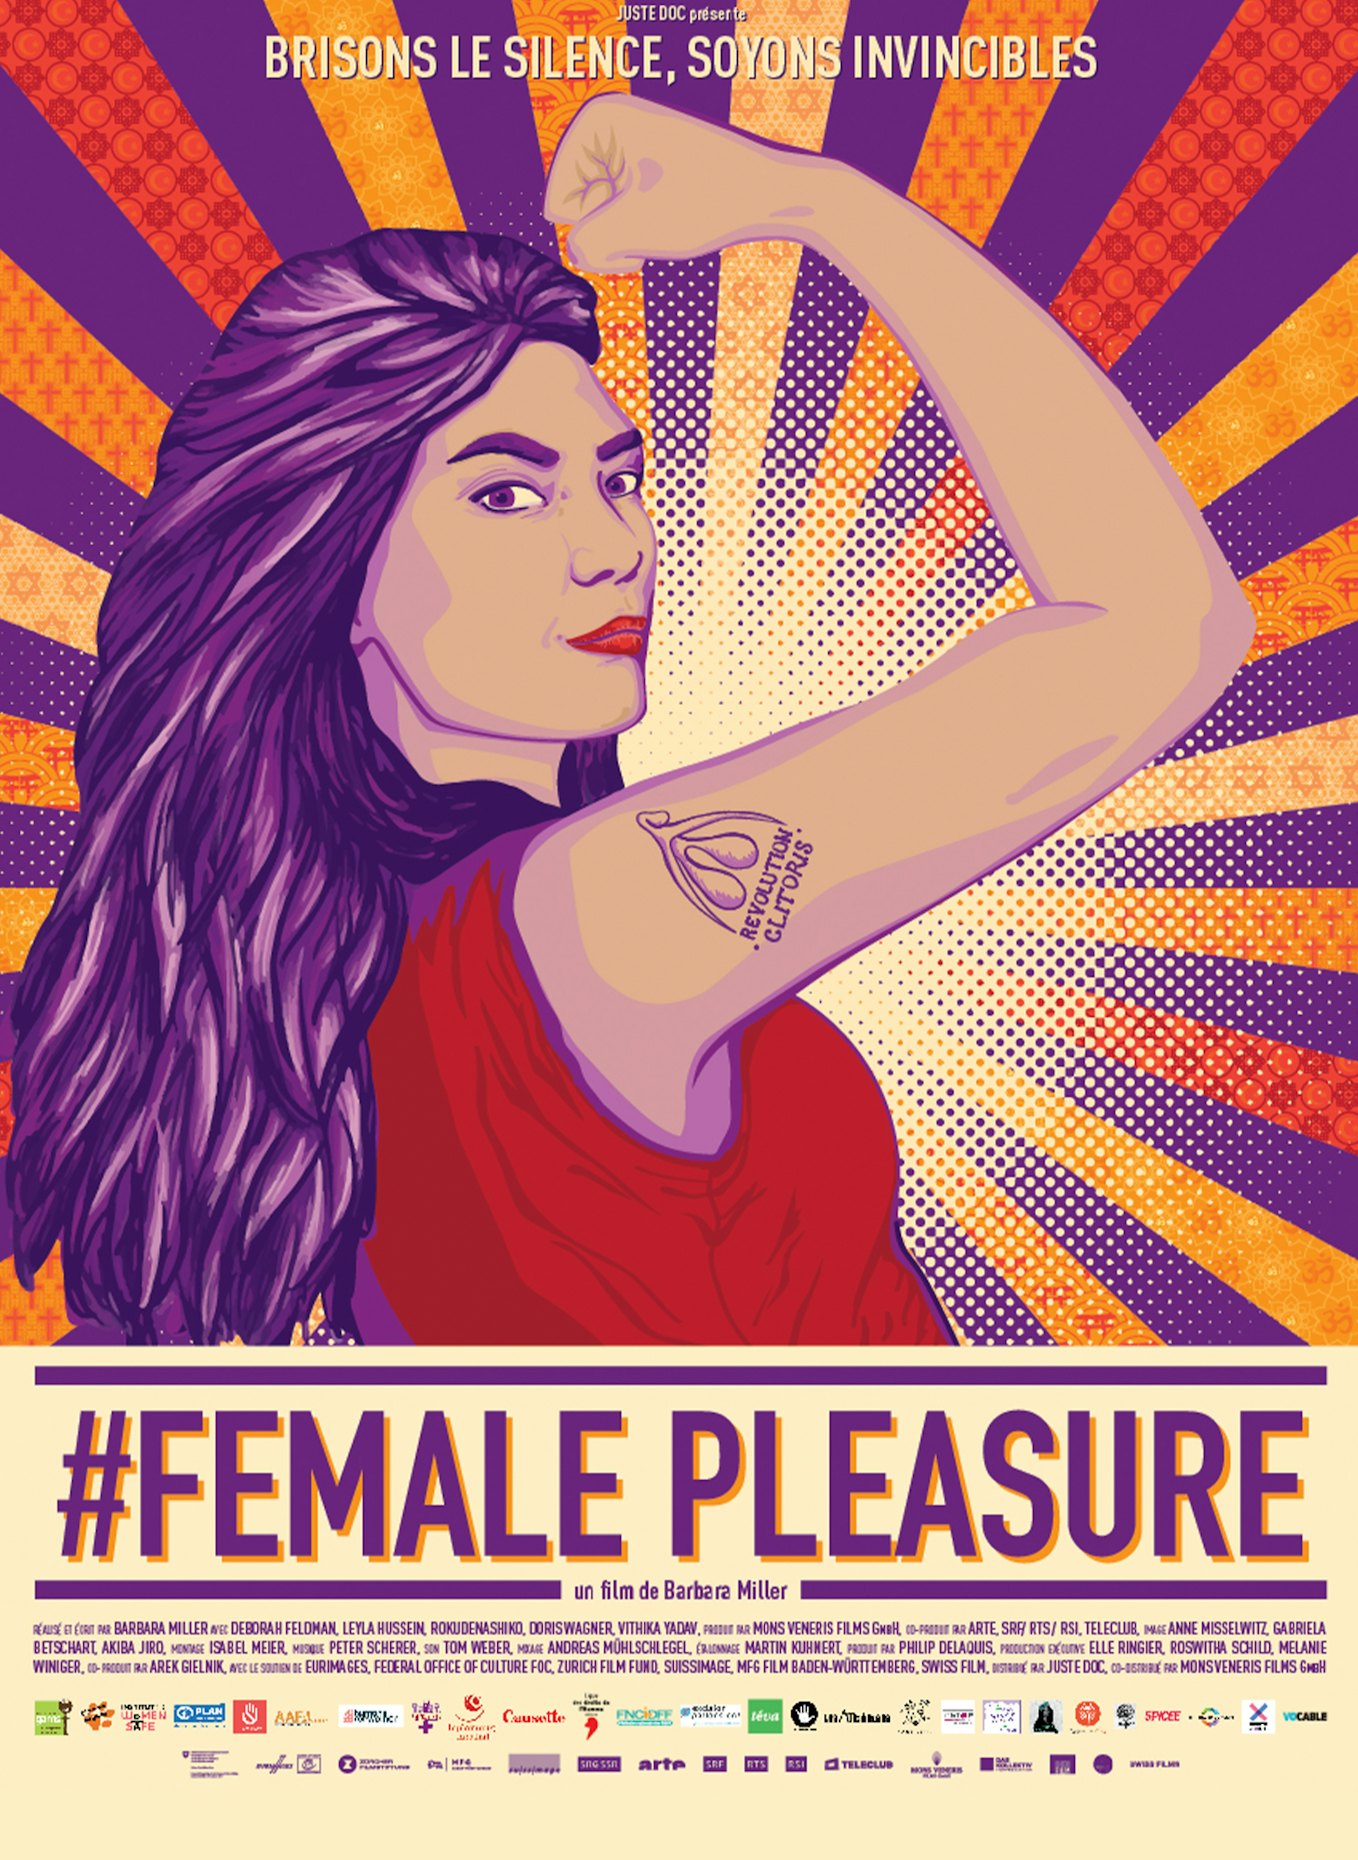 Female pleasure - Barbara Miller 